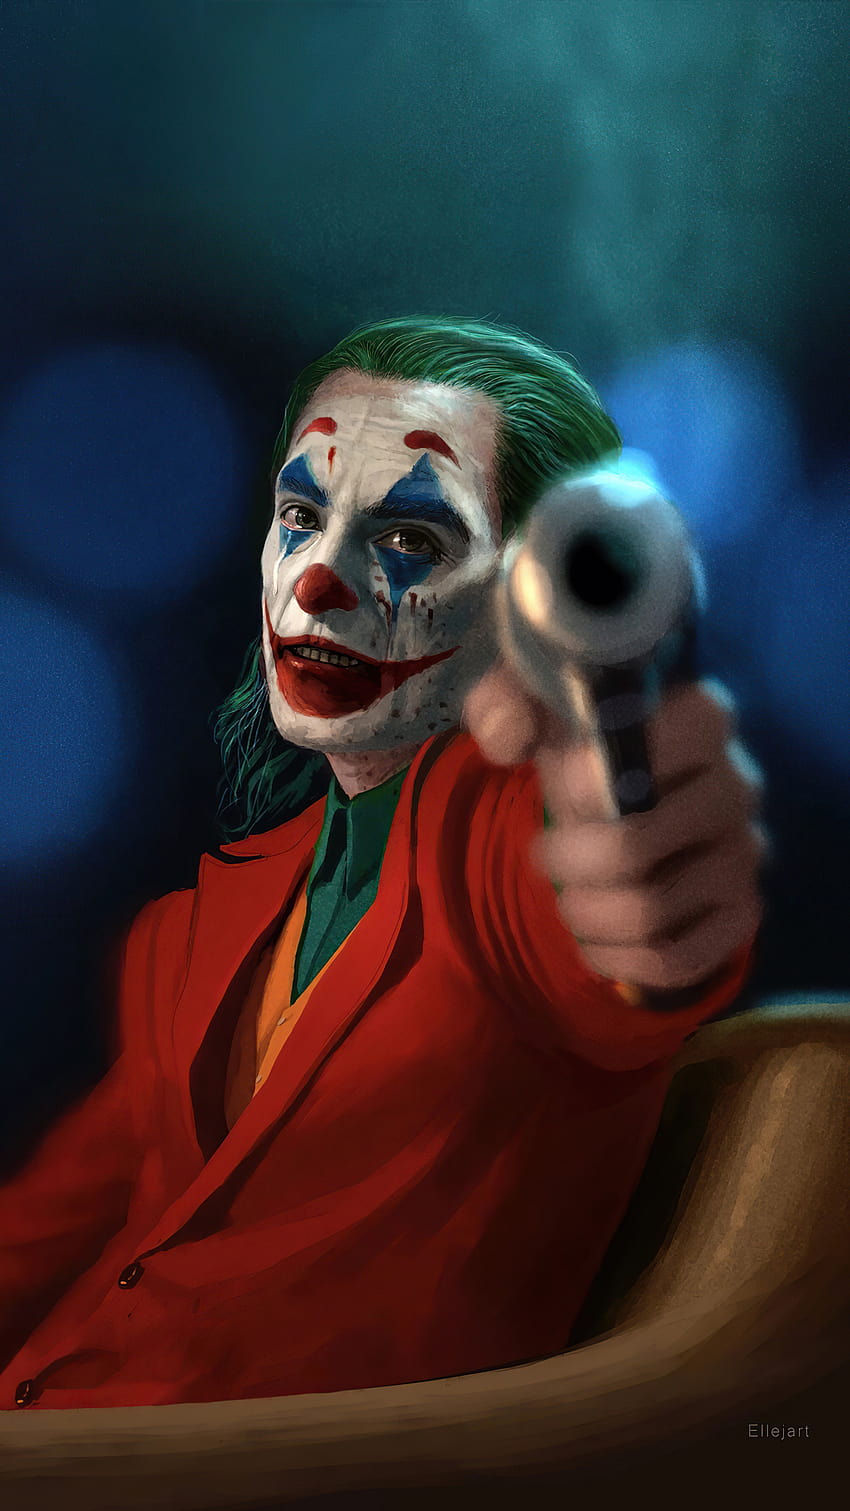 1080x1920 Joker With Gun 2020 Iphone 7,6s,6 Plus, Pixel xl ,One Plus 3,3t,5 , Backgrounds, and, joker dp HD phone wallpaper